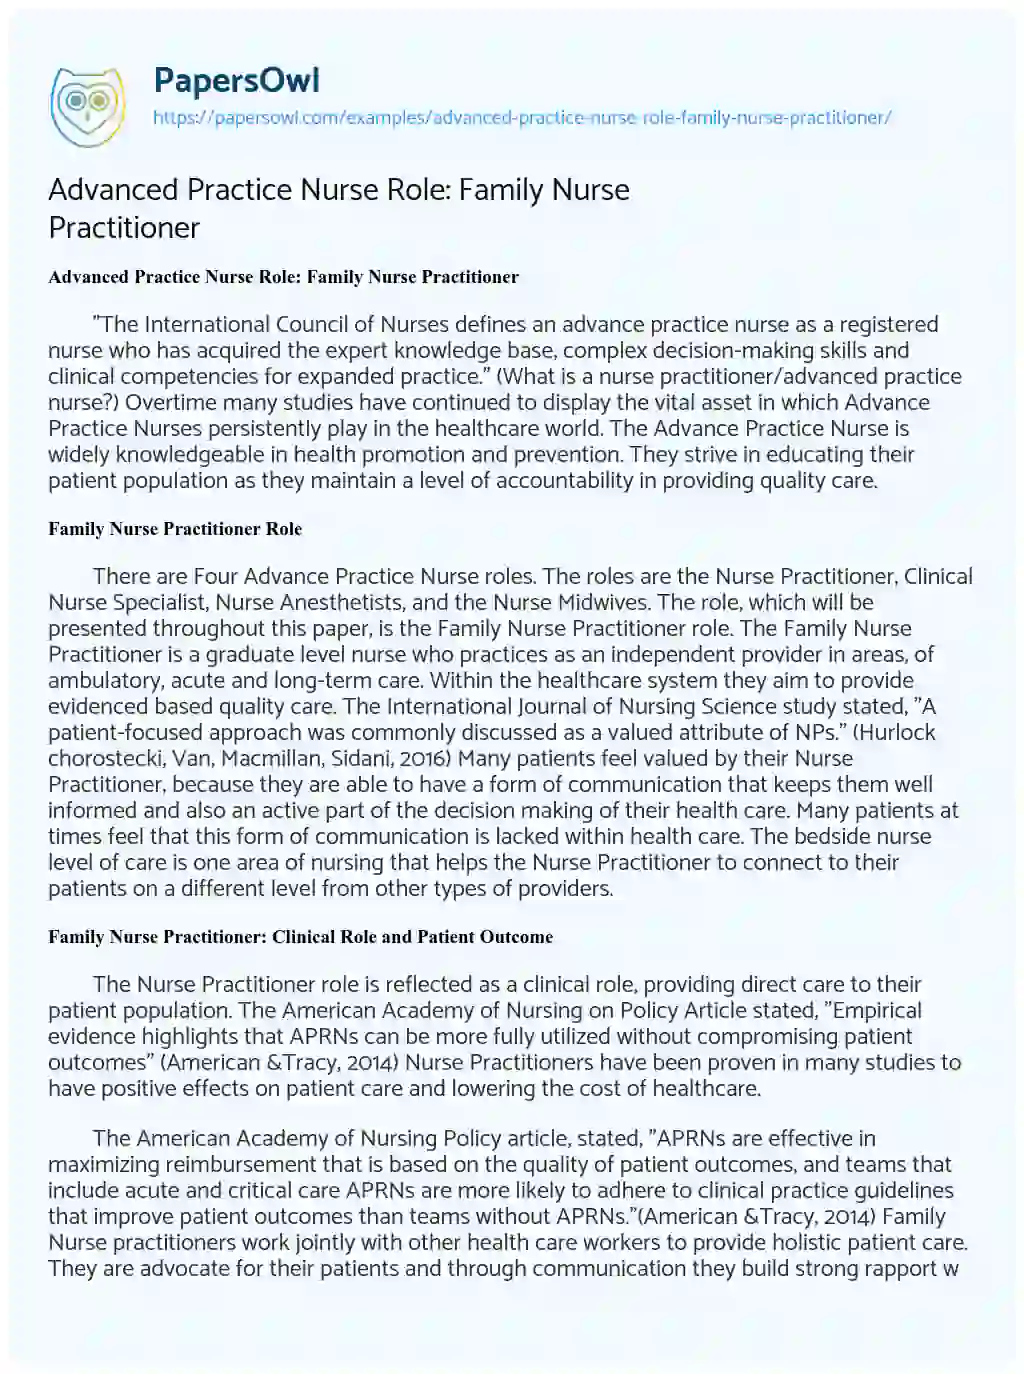 Essay on Advanced Practice Nurse Role: Family Nurse Practitioner